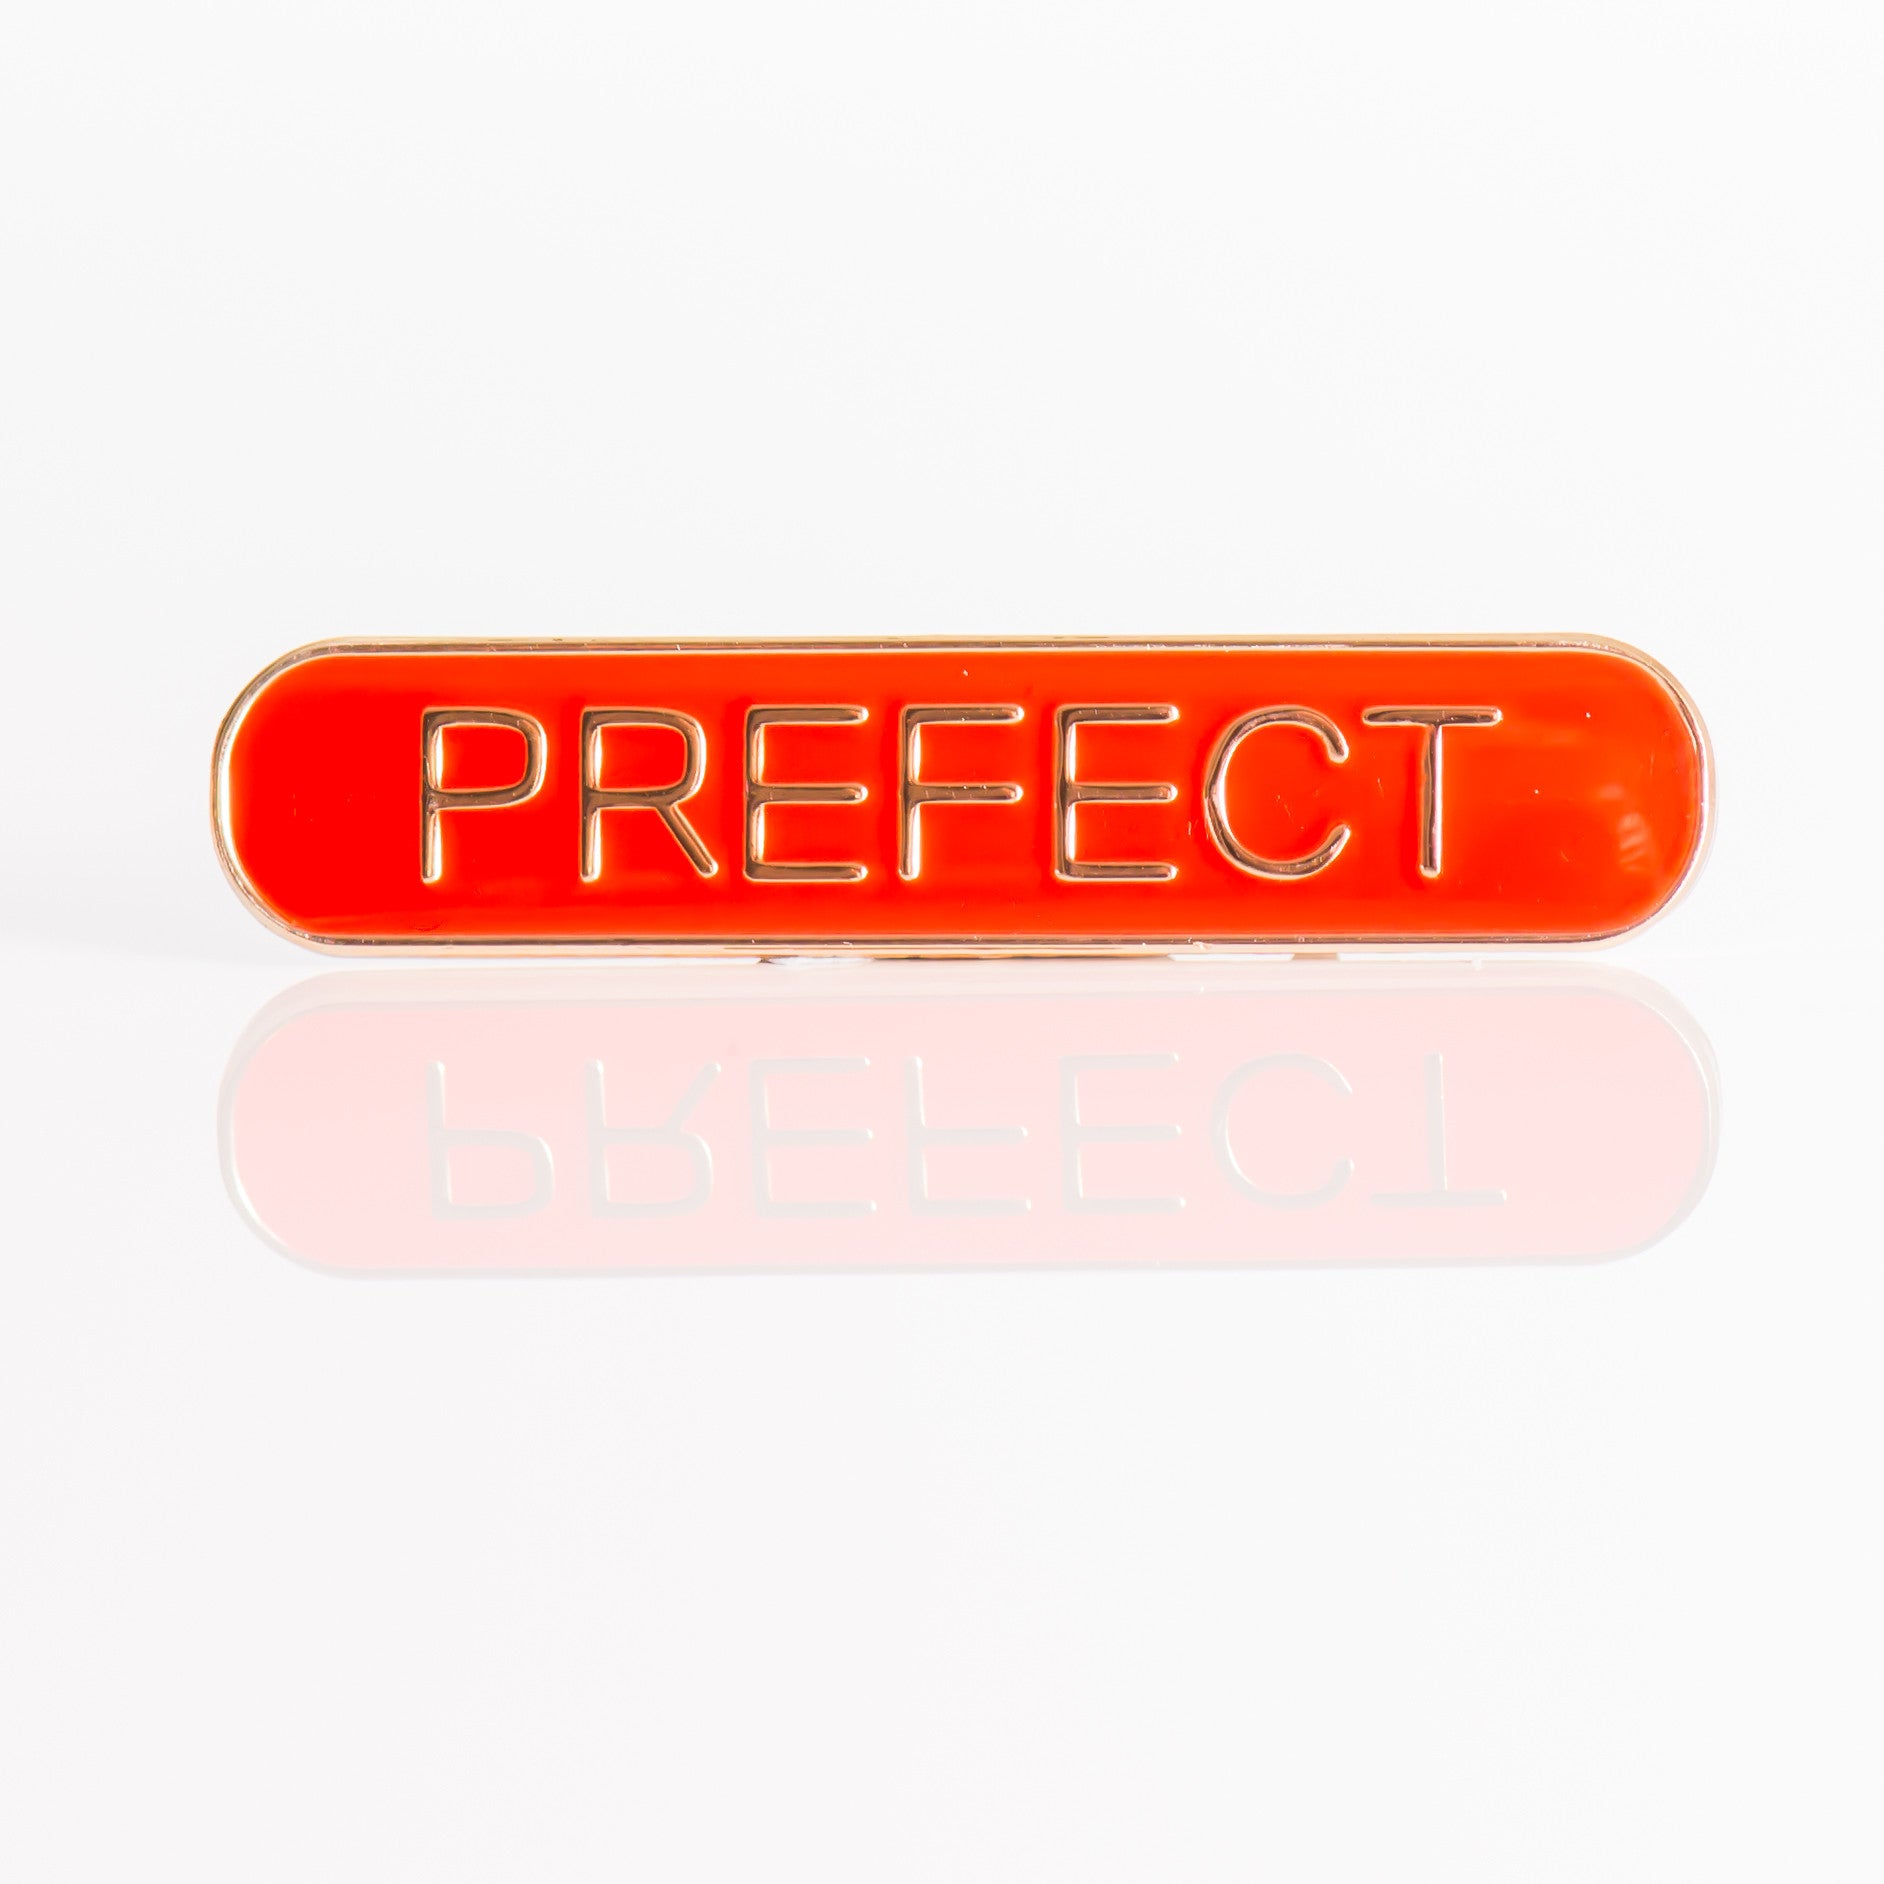 Enamel Bar Pin Badge - Prefect